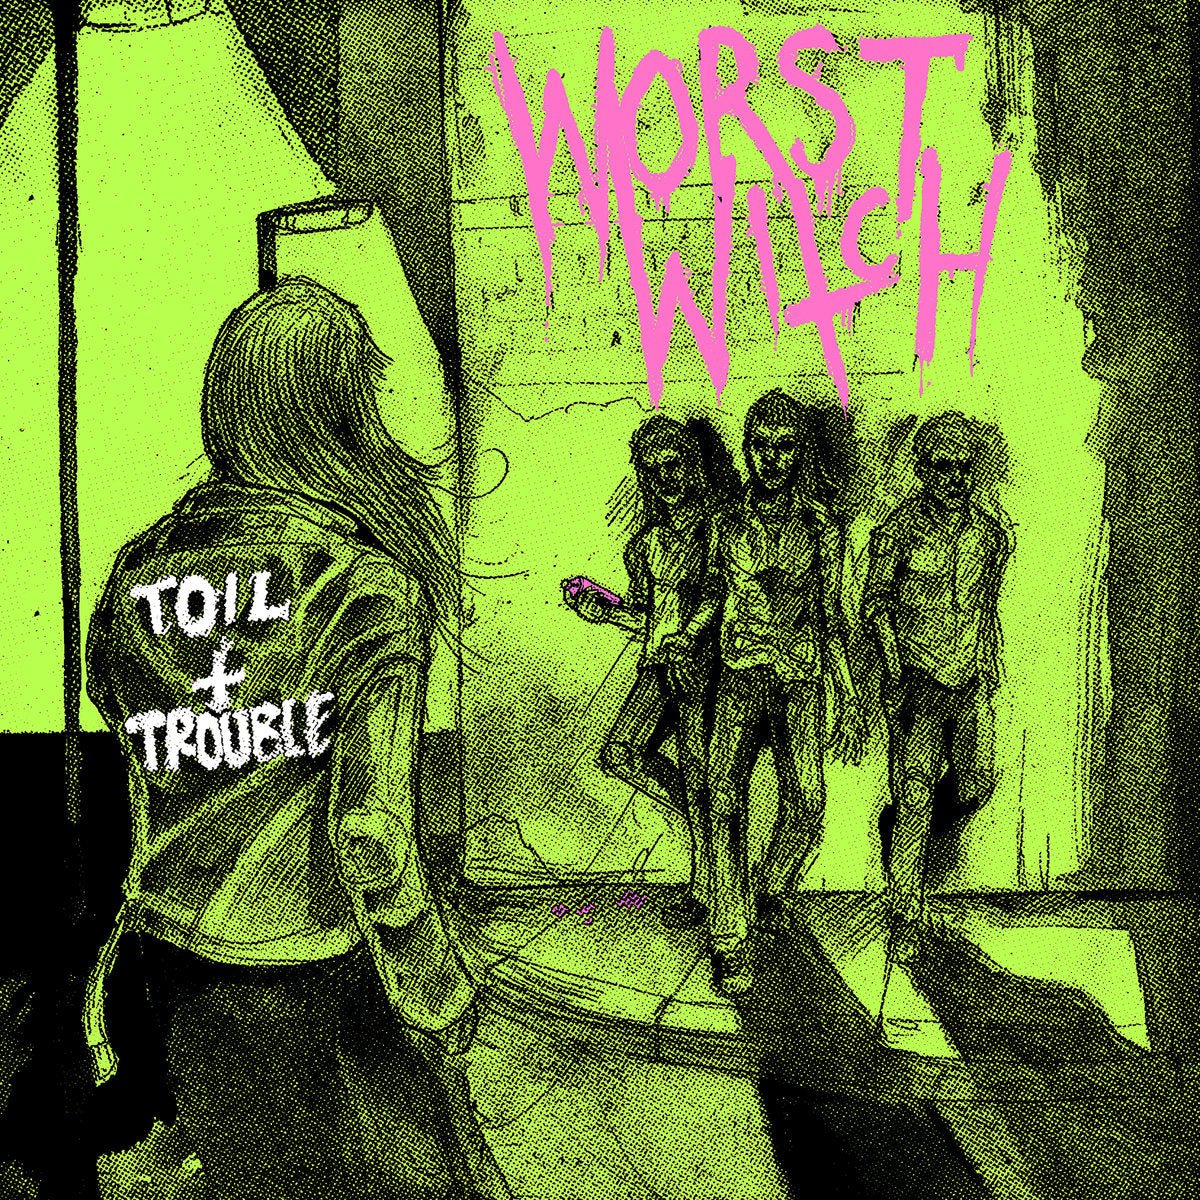 Worst Witch - Toil and Trouble 12" - Vinyl - Alerta Antifascista